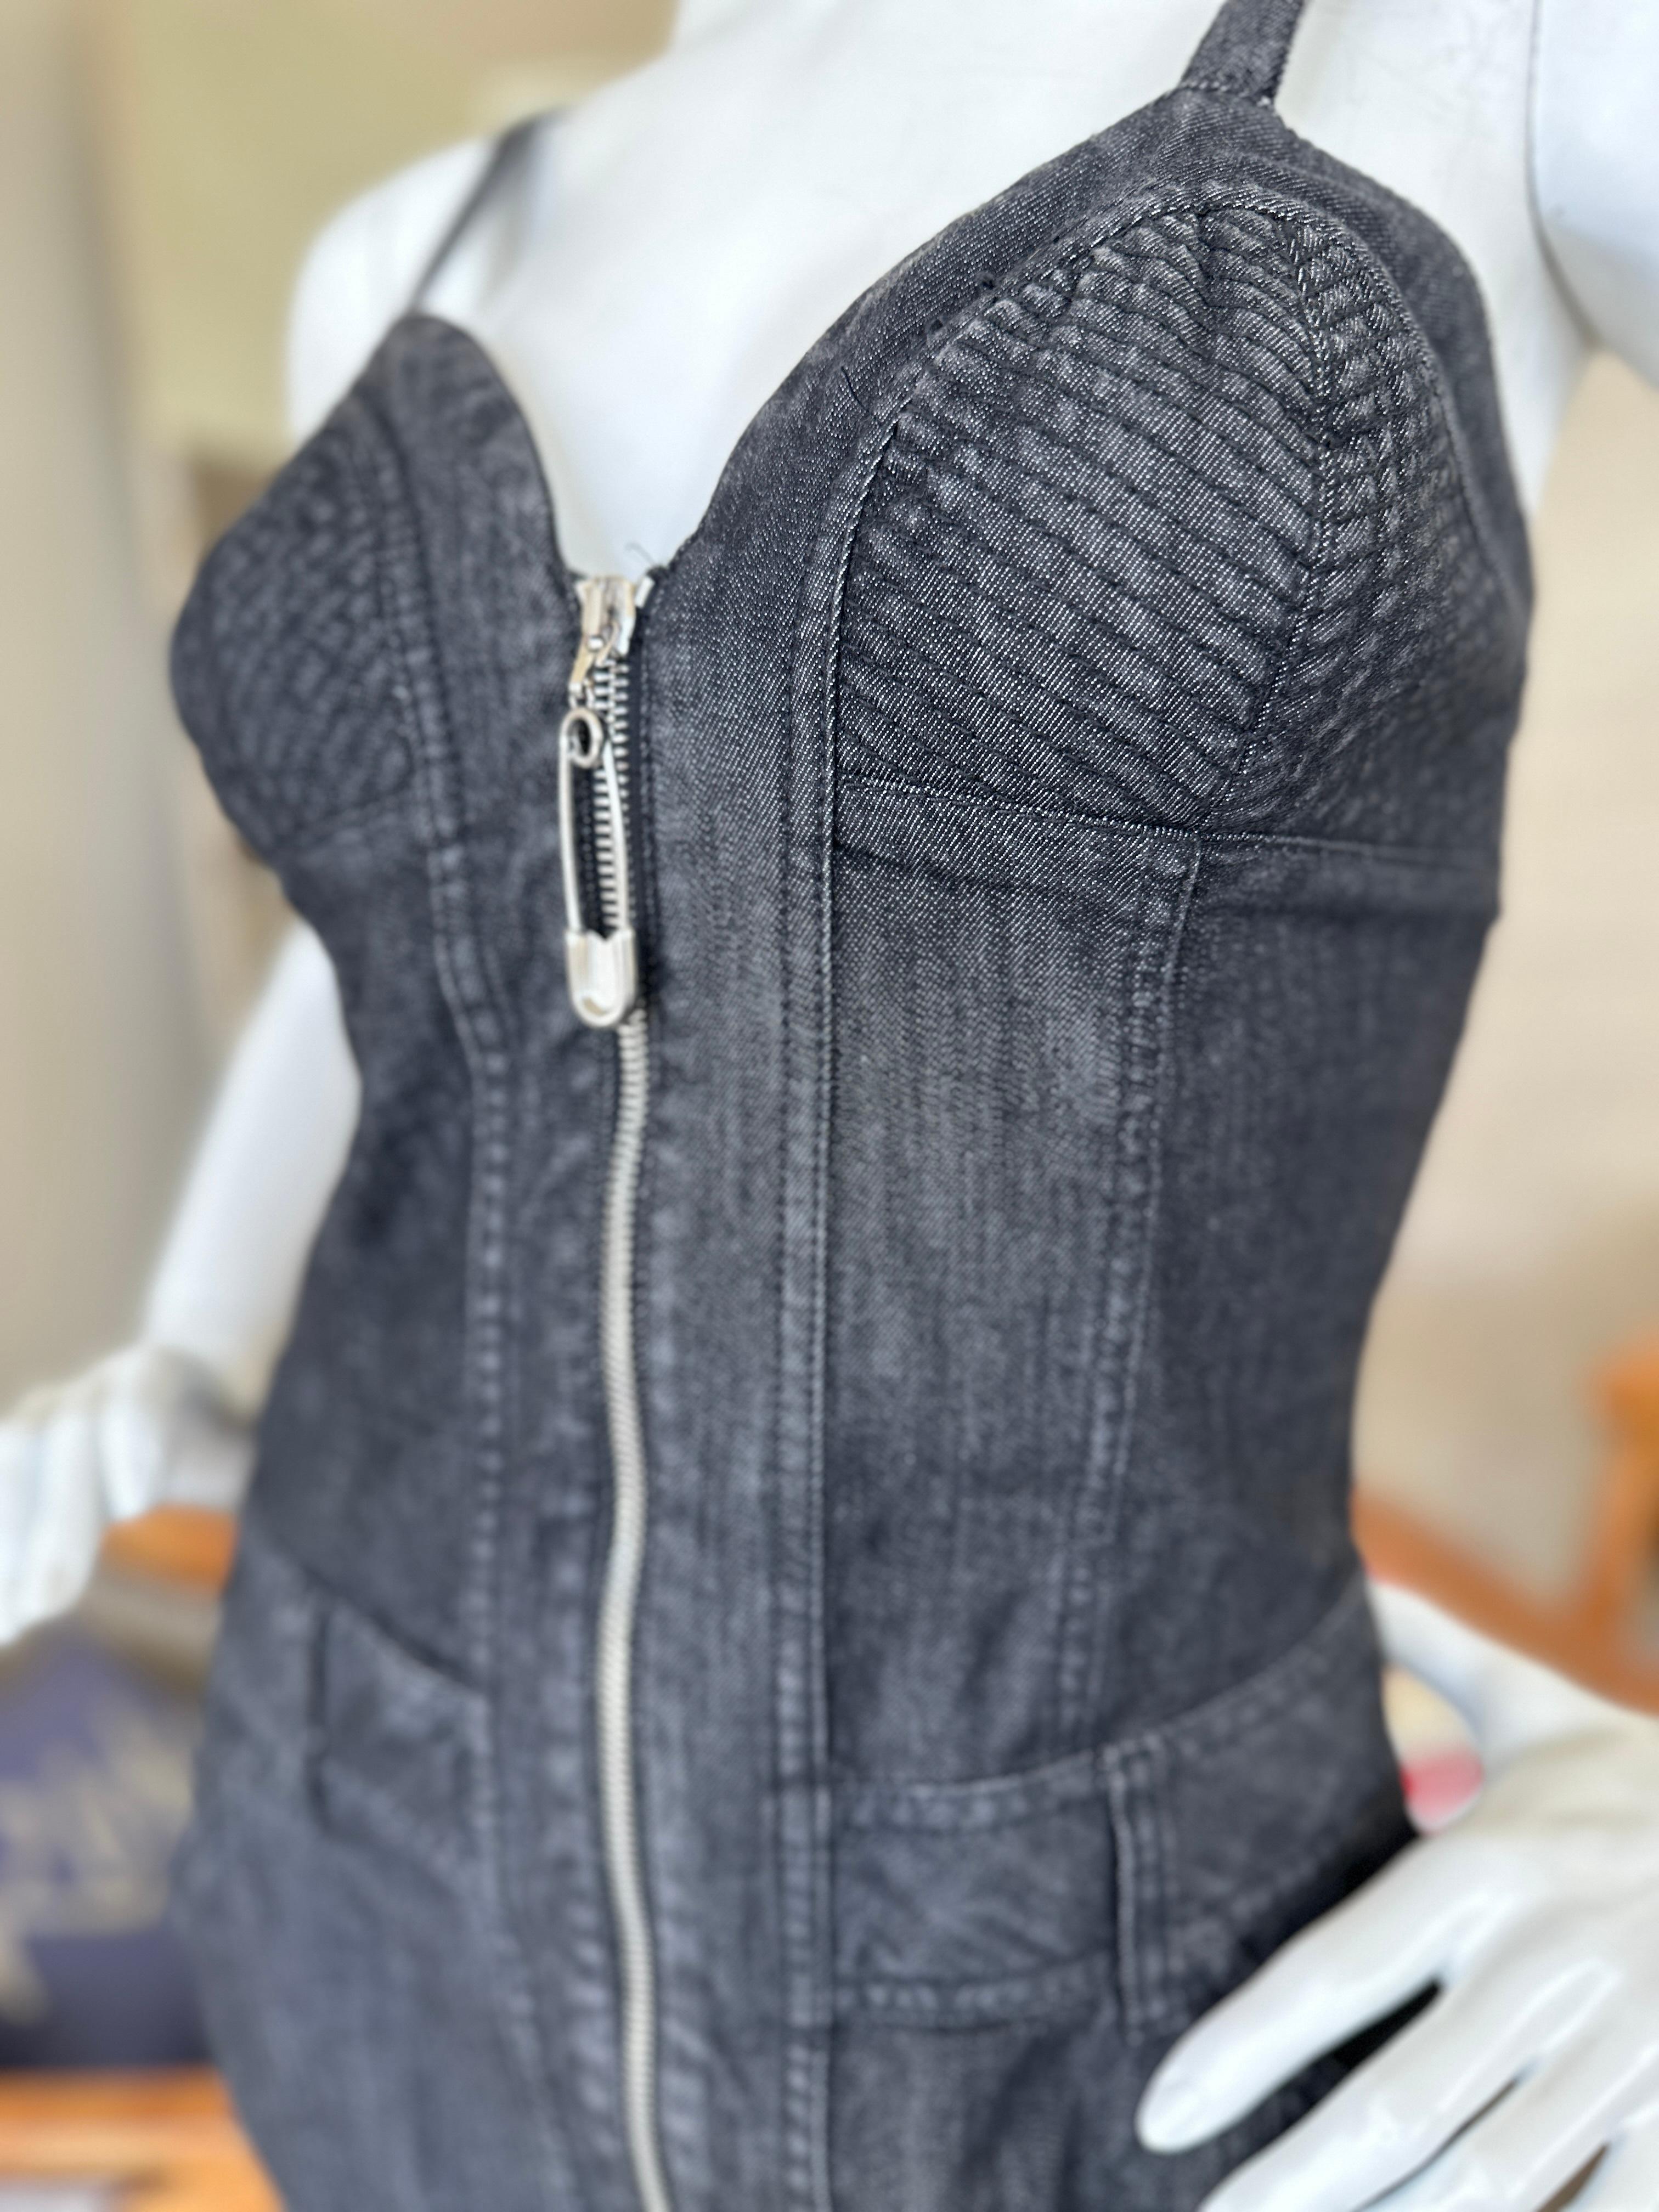 Moschino Jeans Vintage Denim Zip Front Dress
Size 6 US 40 It
Bust 34